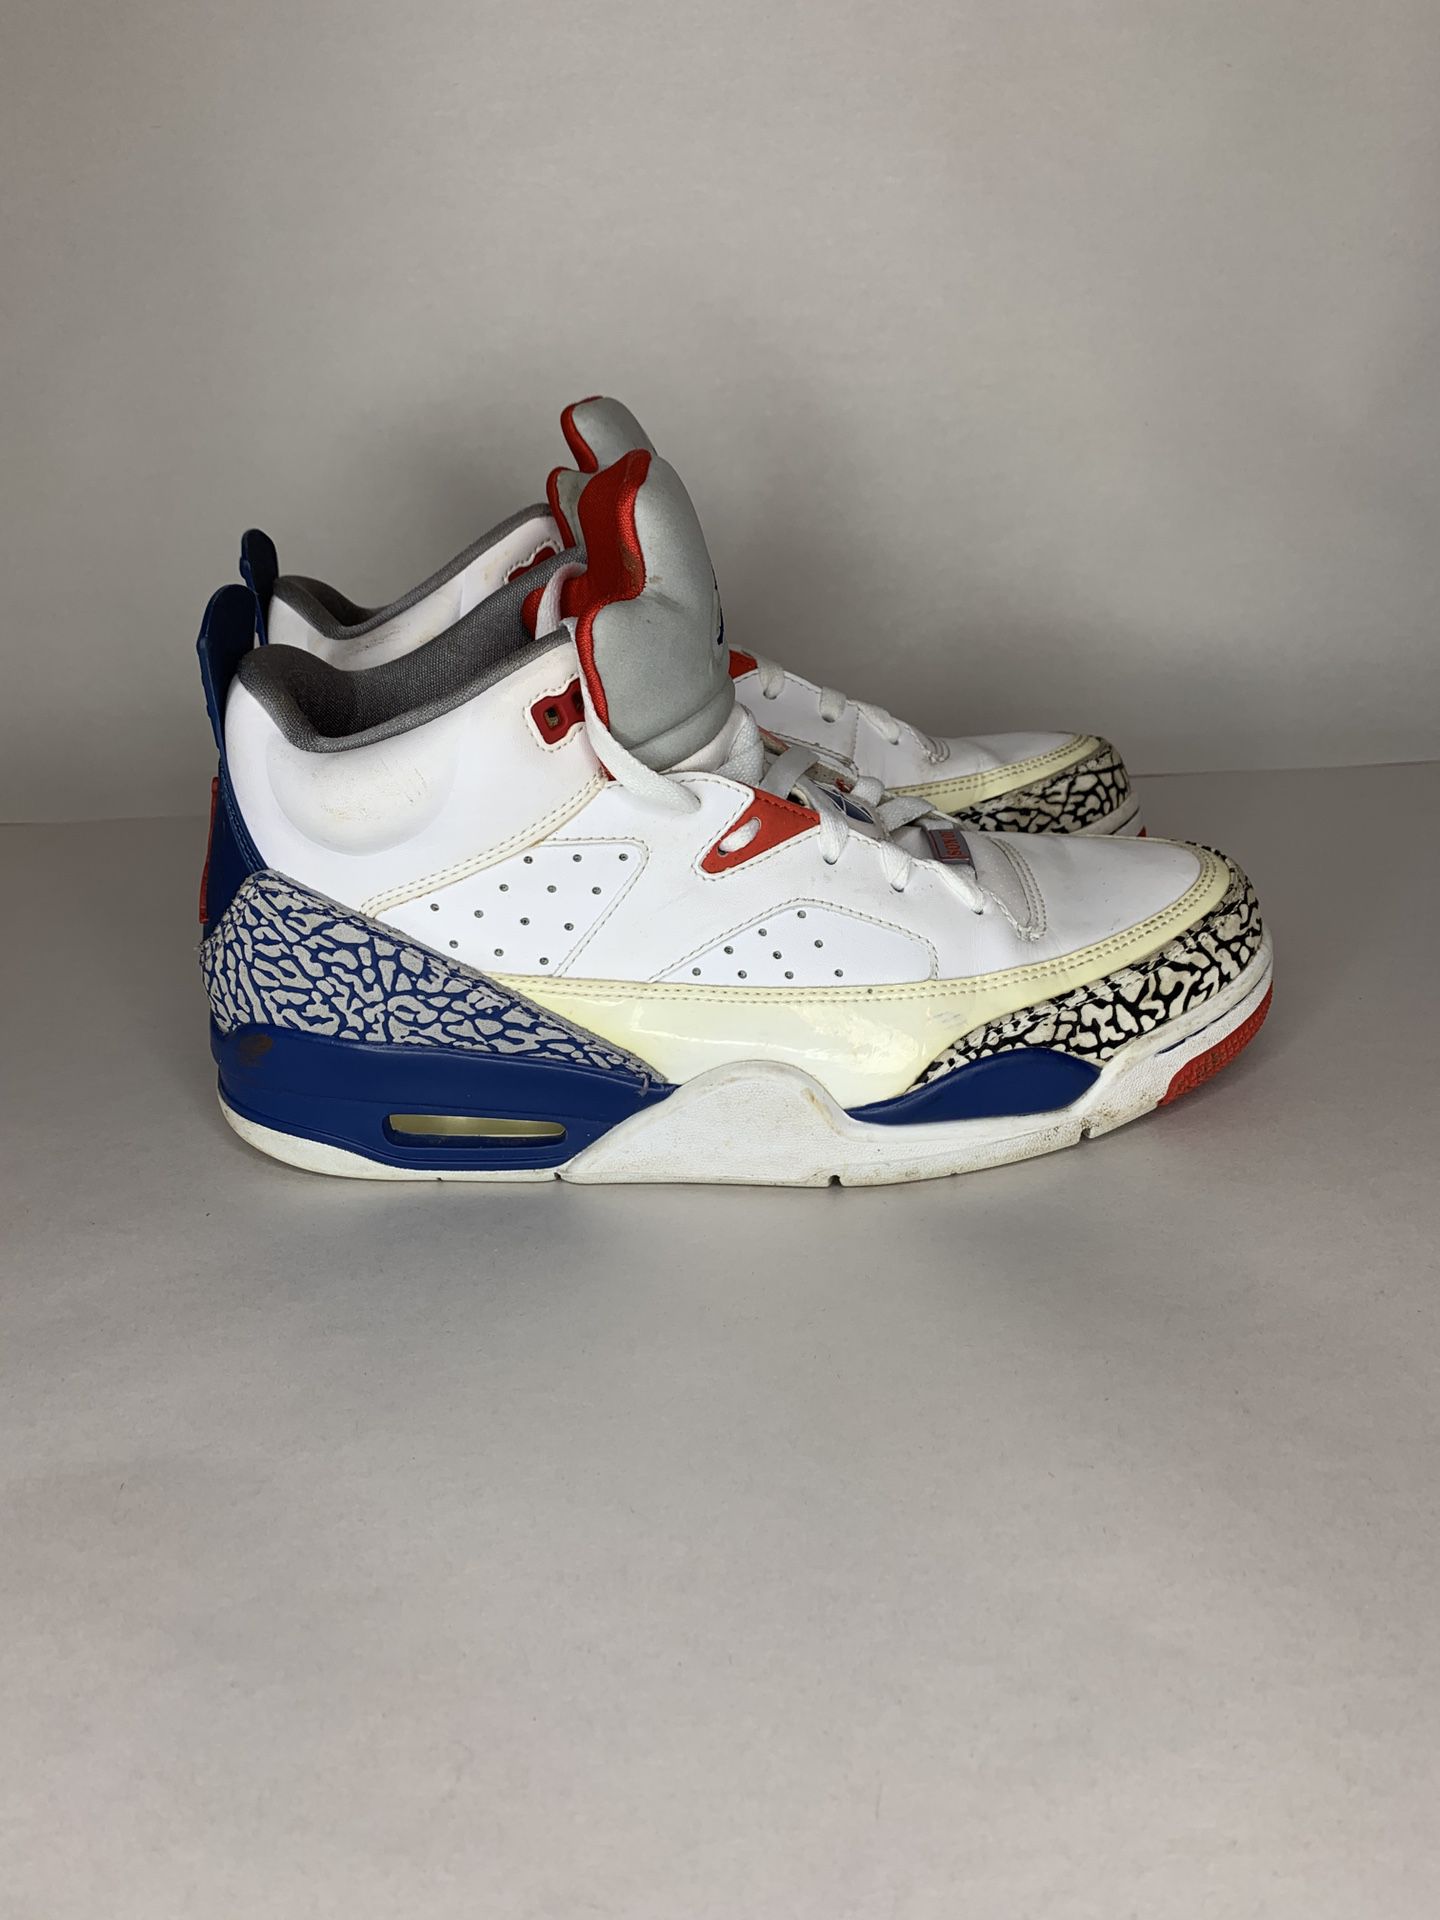 Nike Air Jordan Son Of Mars Men's Basketball Shoes Size 9.5 Used  No original box.